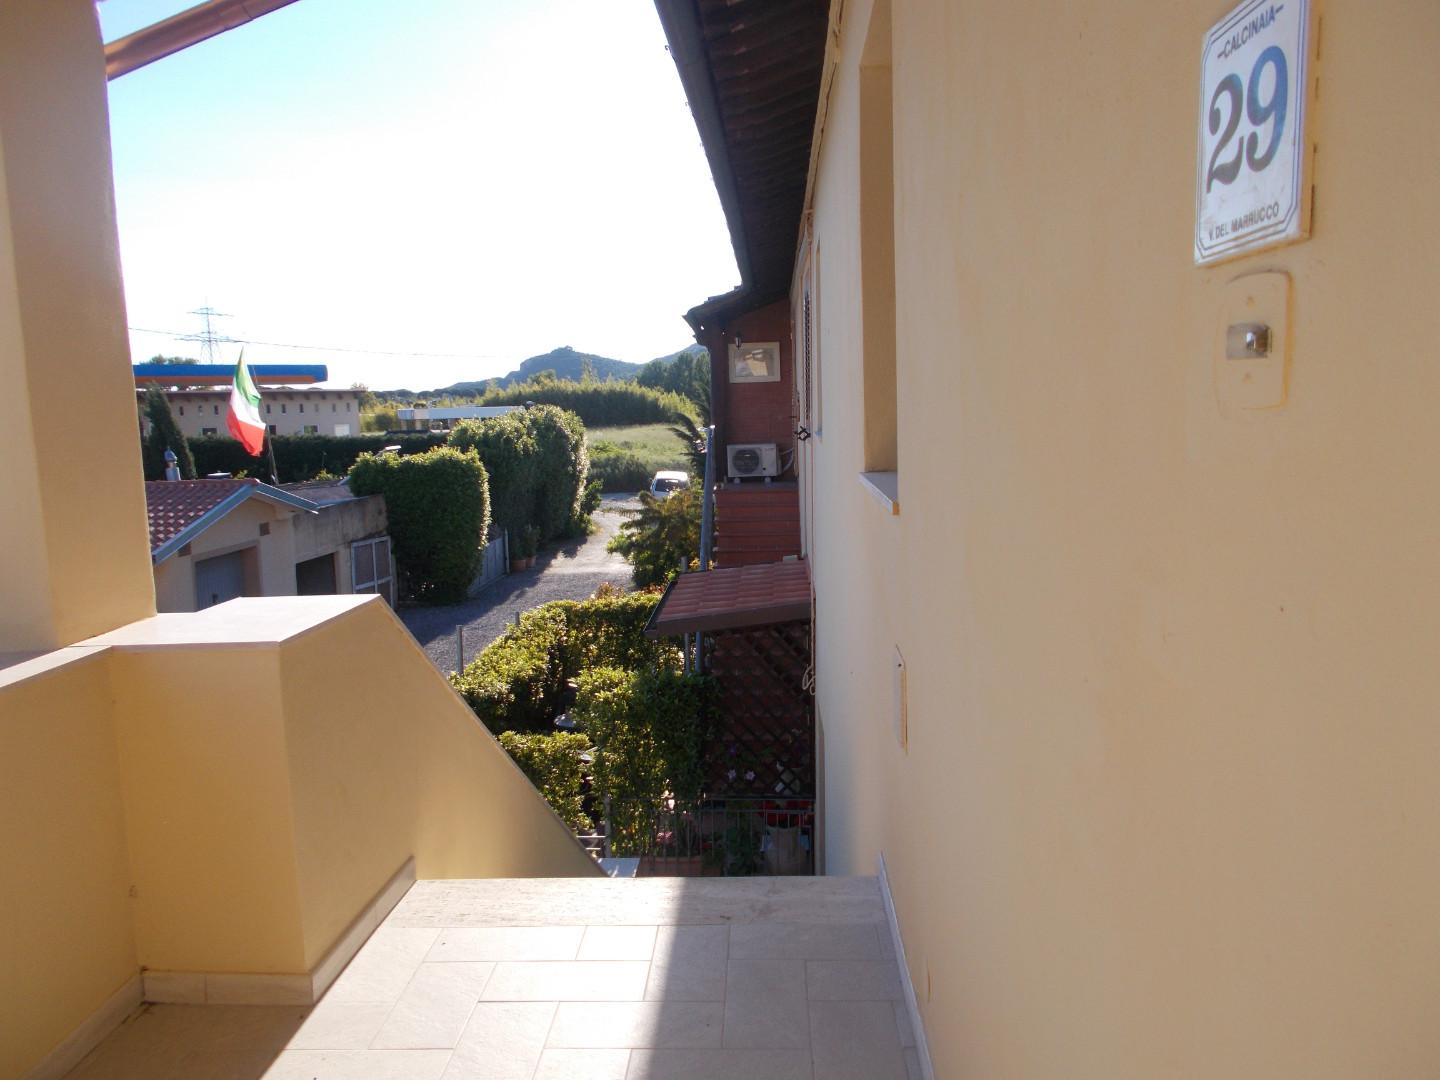 Apartment for rent in Calcinaia (PI)